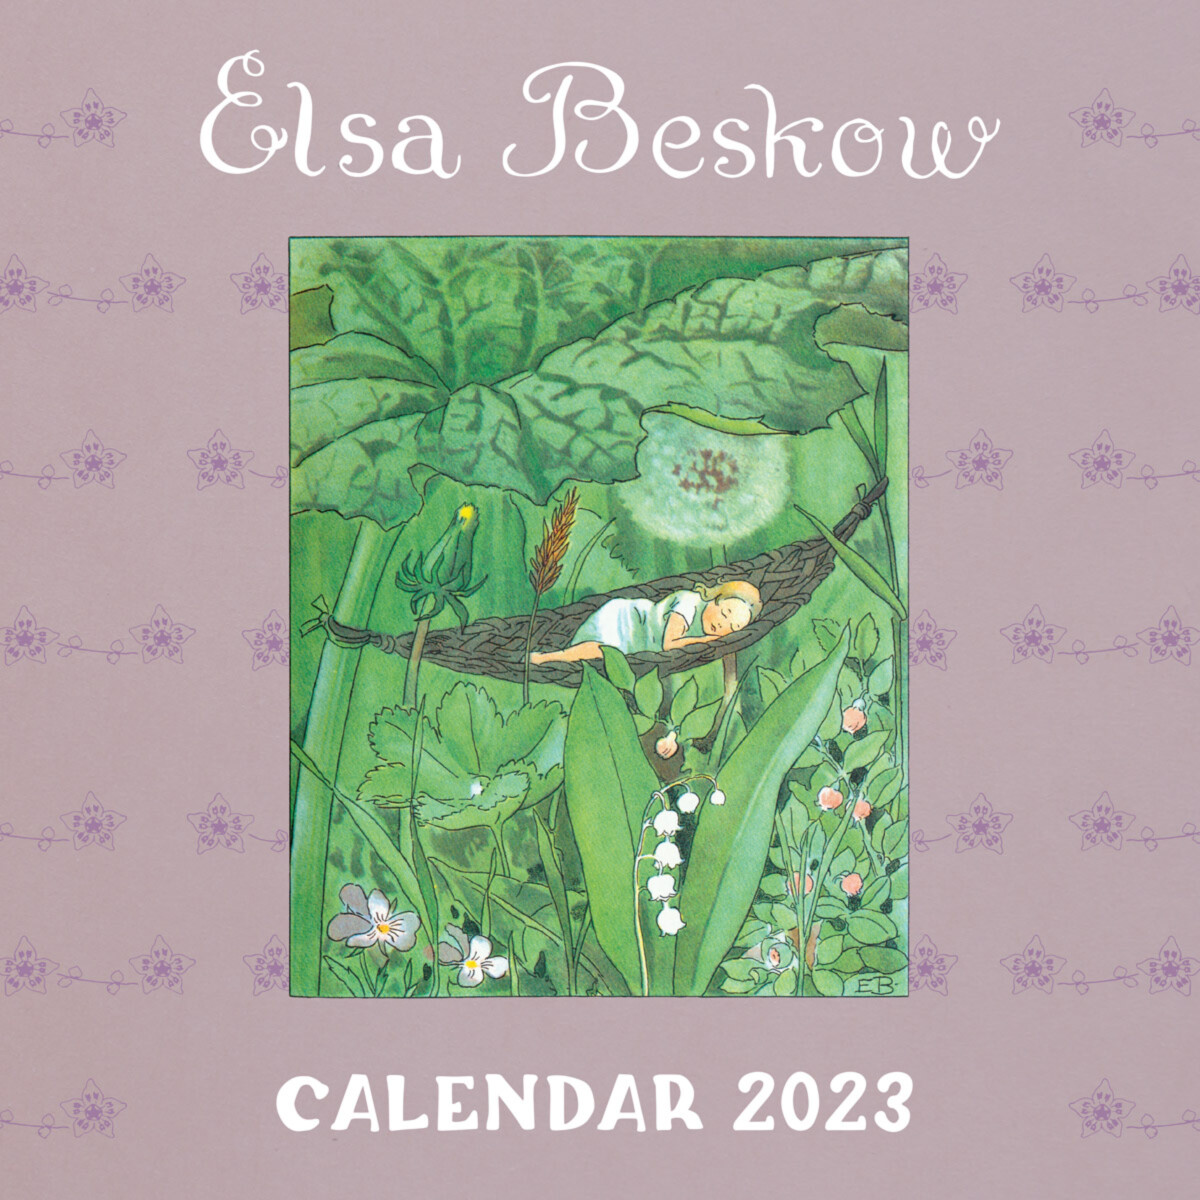 Elsa Beskow Calendar 2023